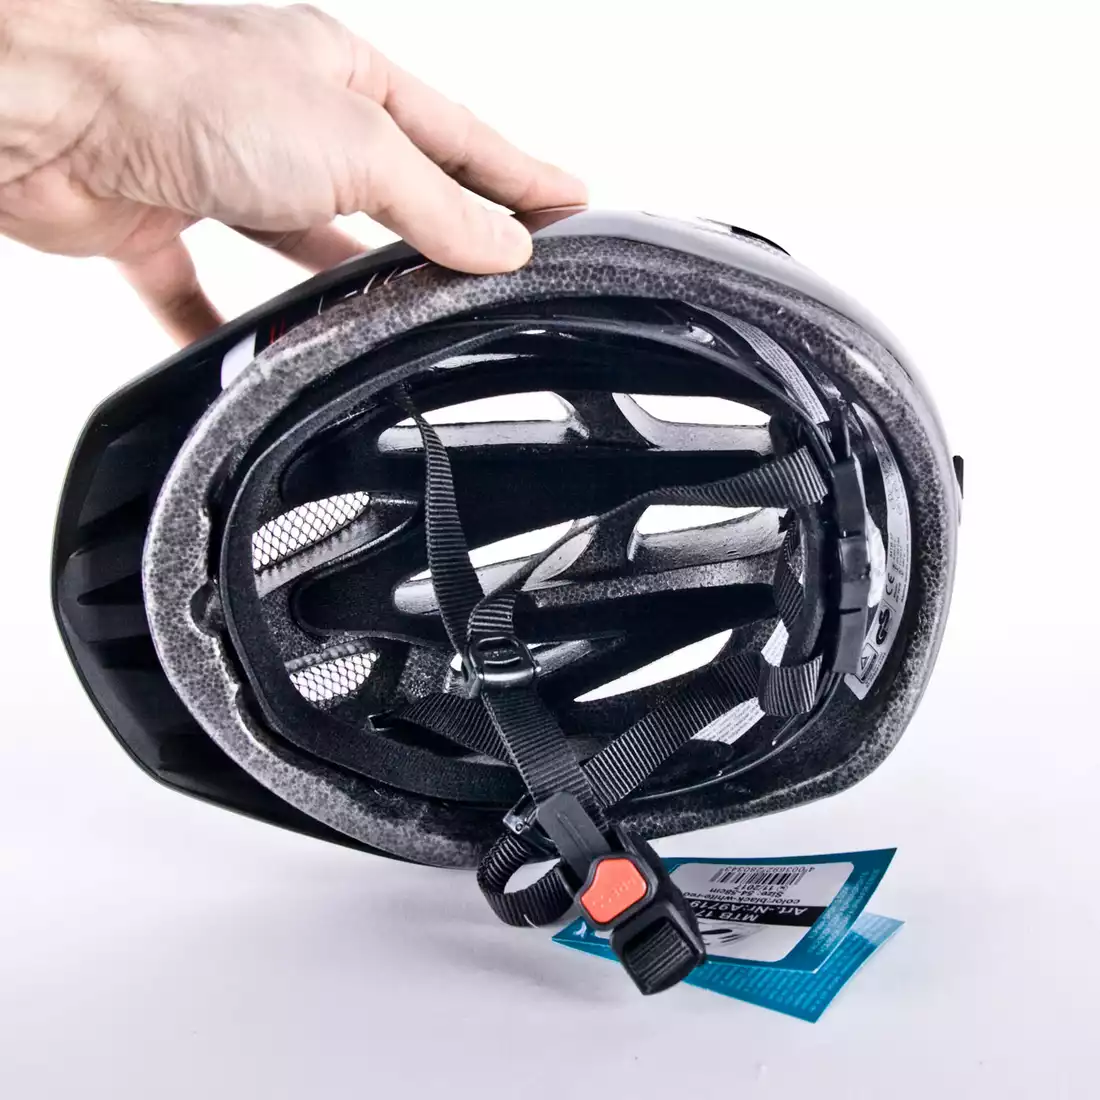 Alpina MTB17 Mountain Bike MTB Bicycle Helmet 54-58cms in-mould Mens mans Black 